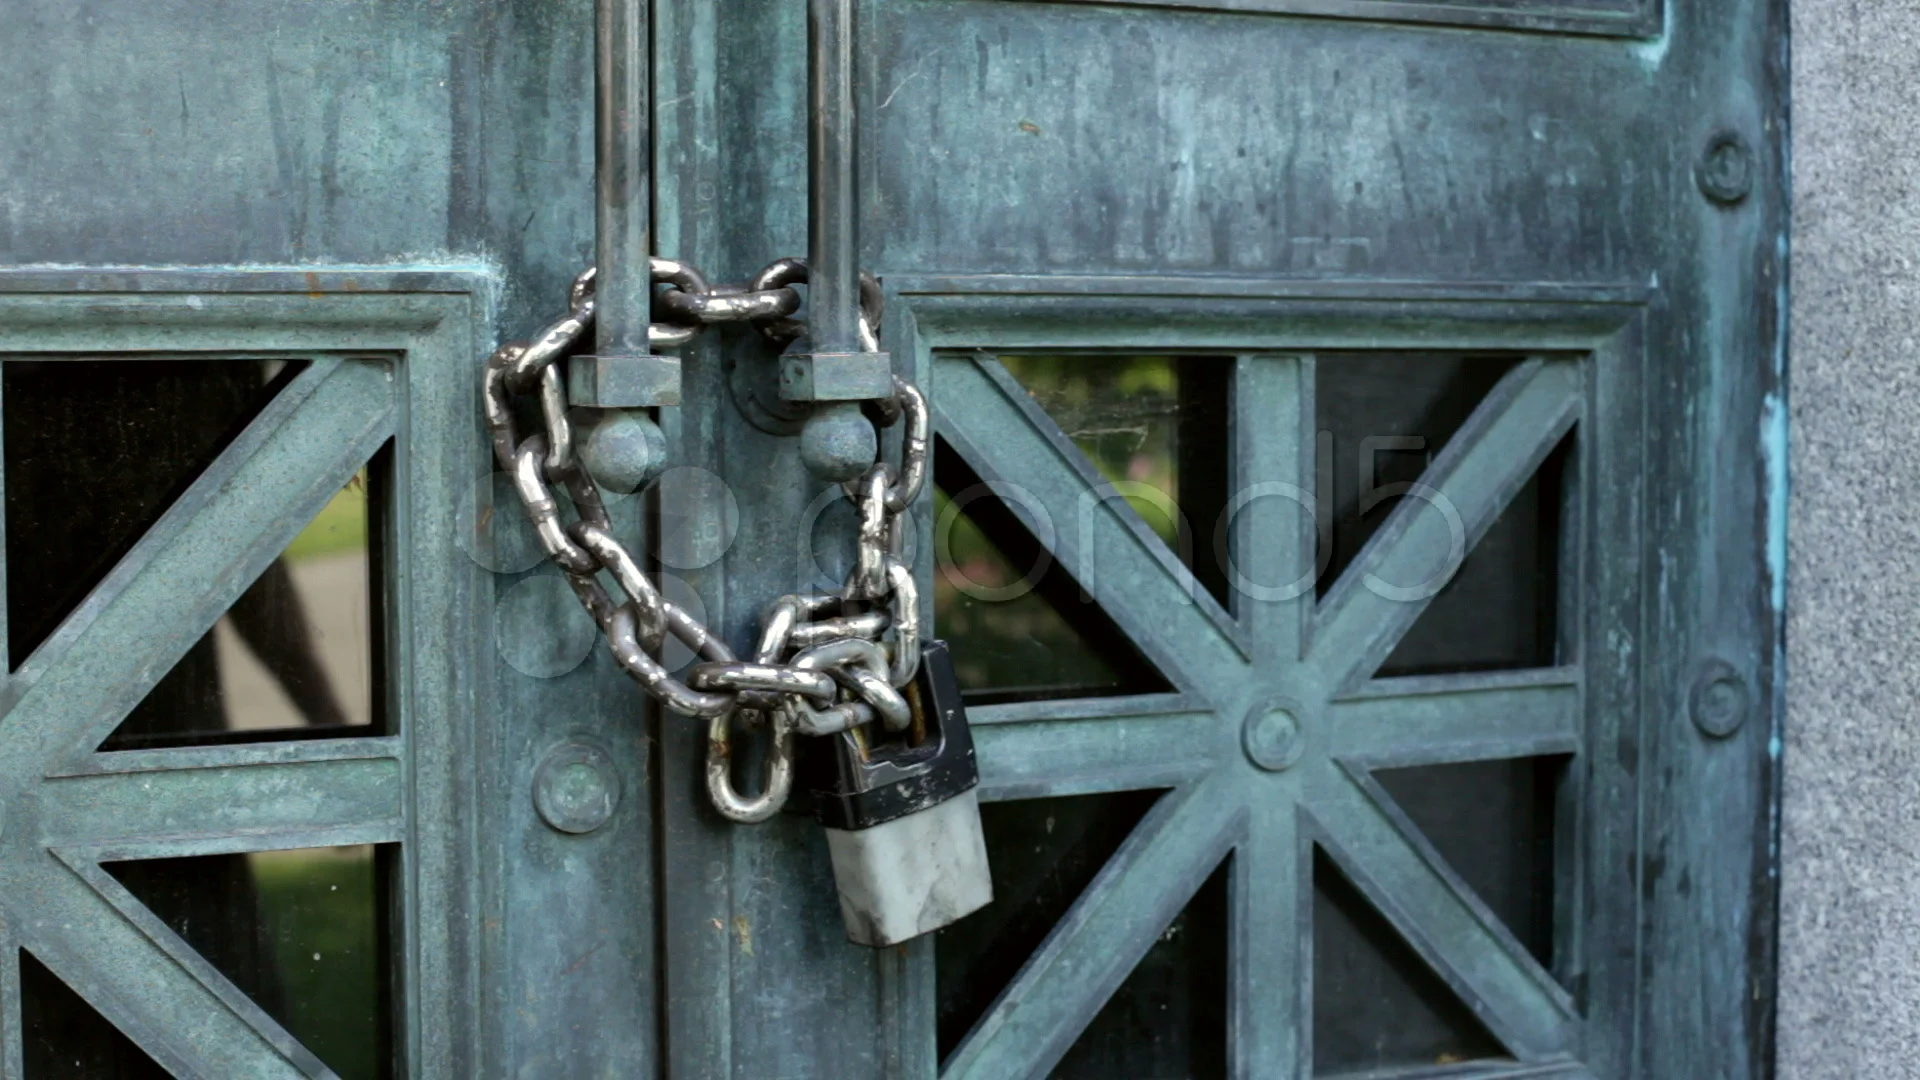 Pulling on Chain on Locked Door | Stock Video | Pond5